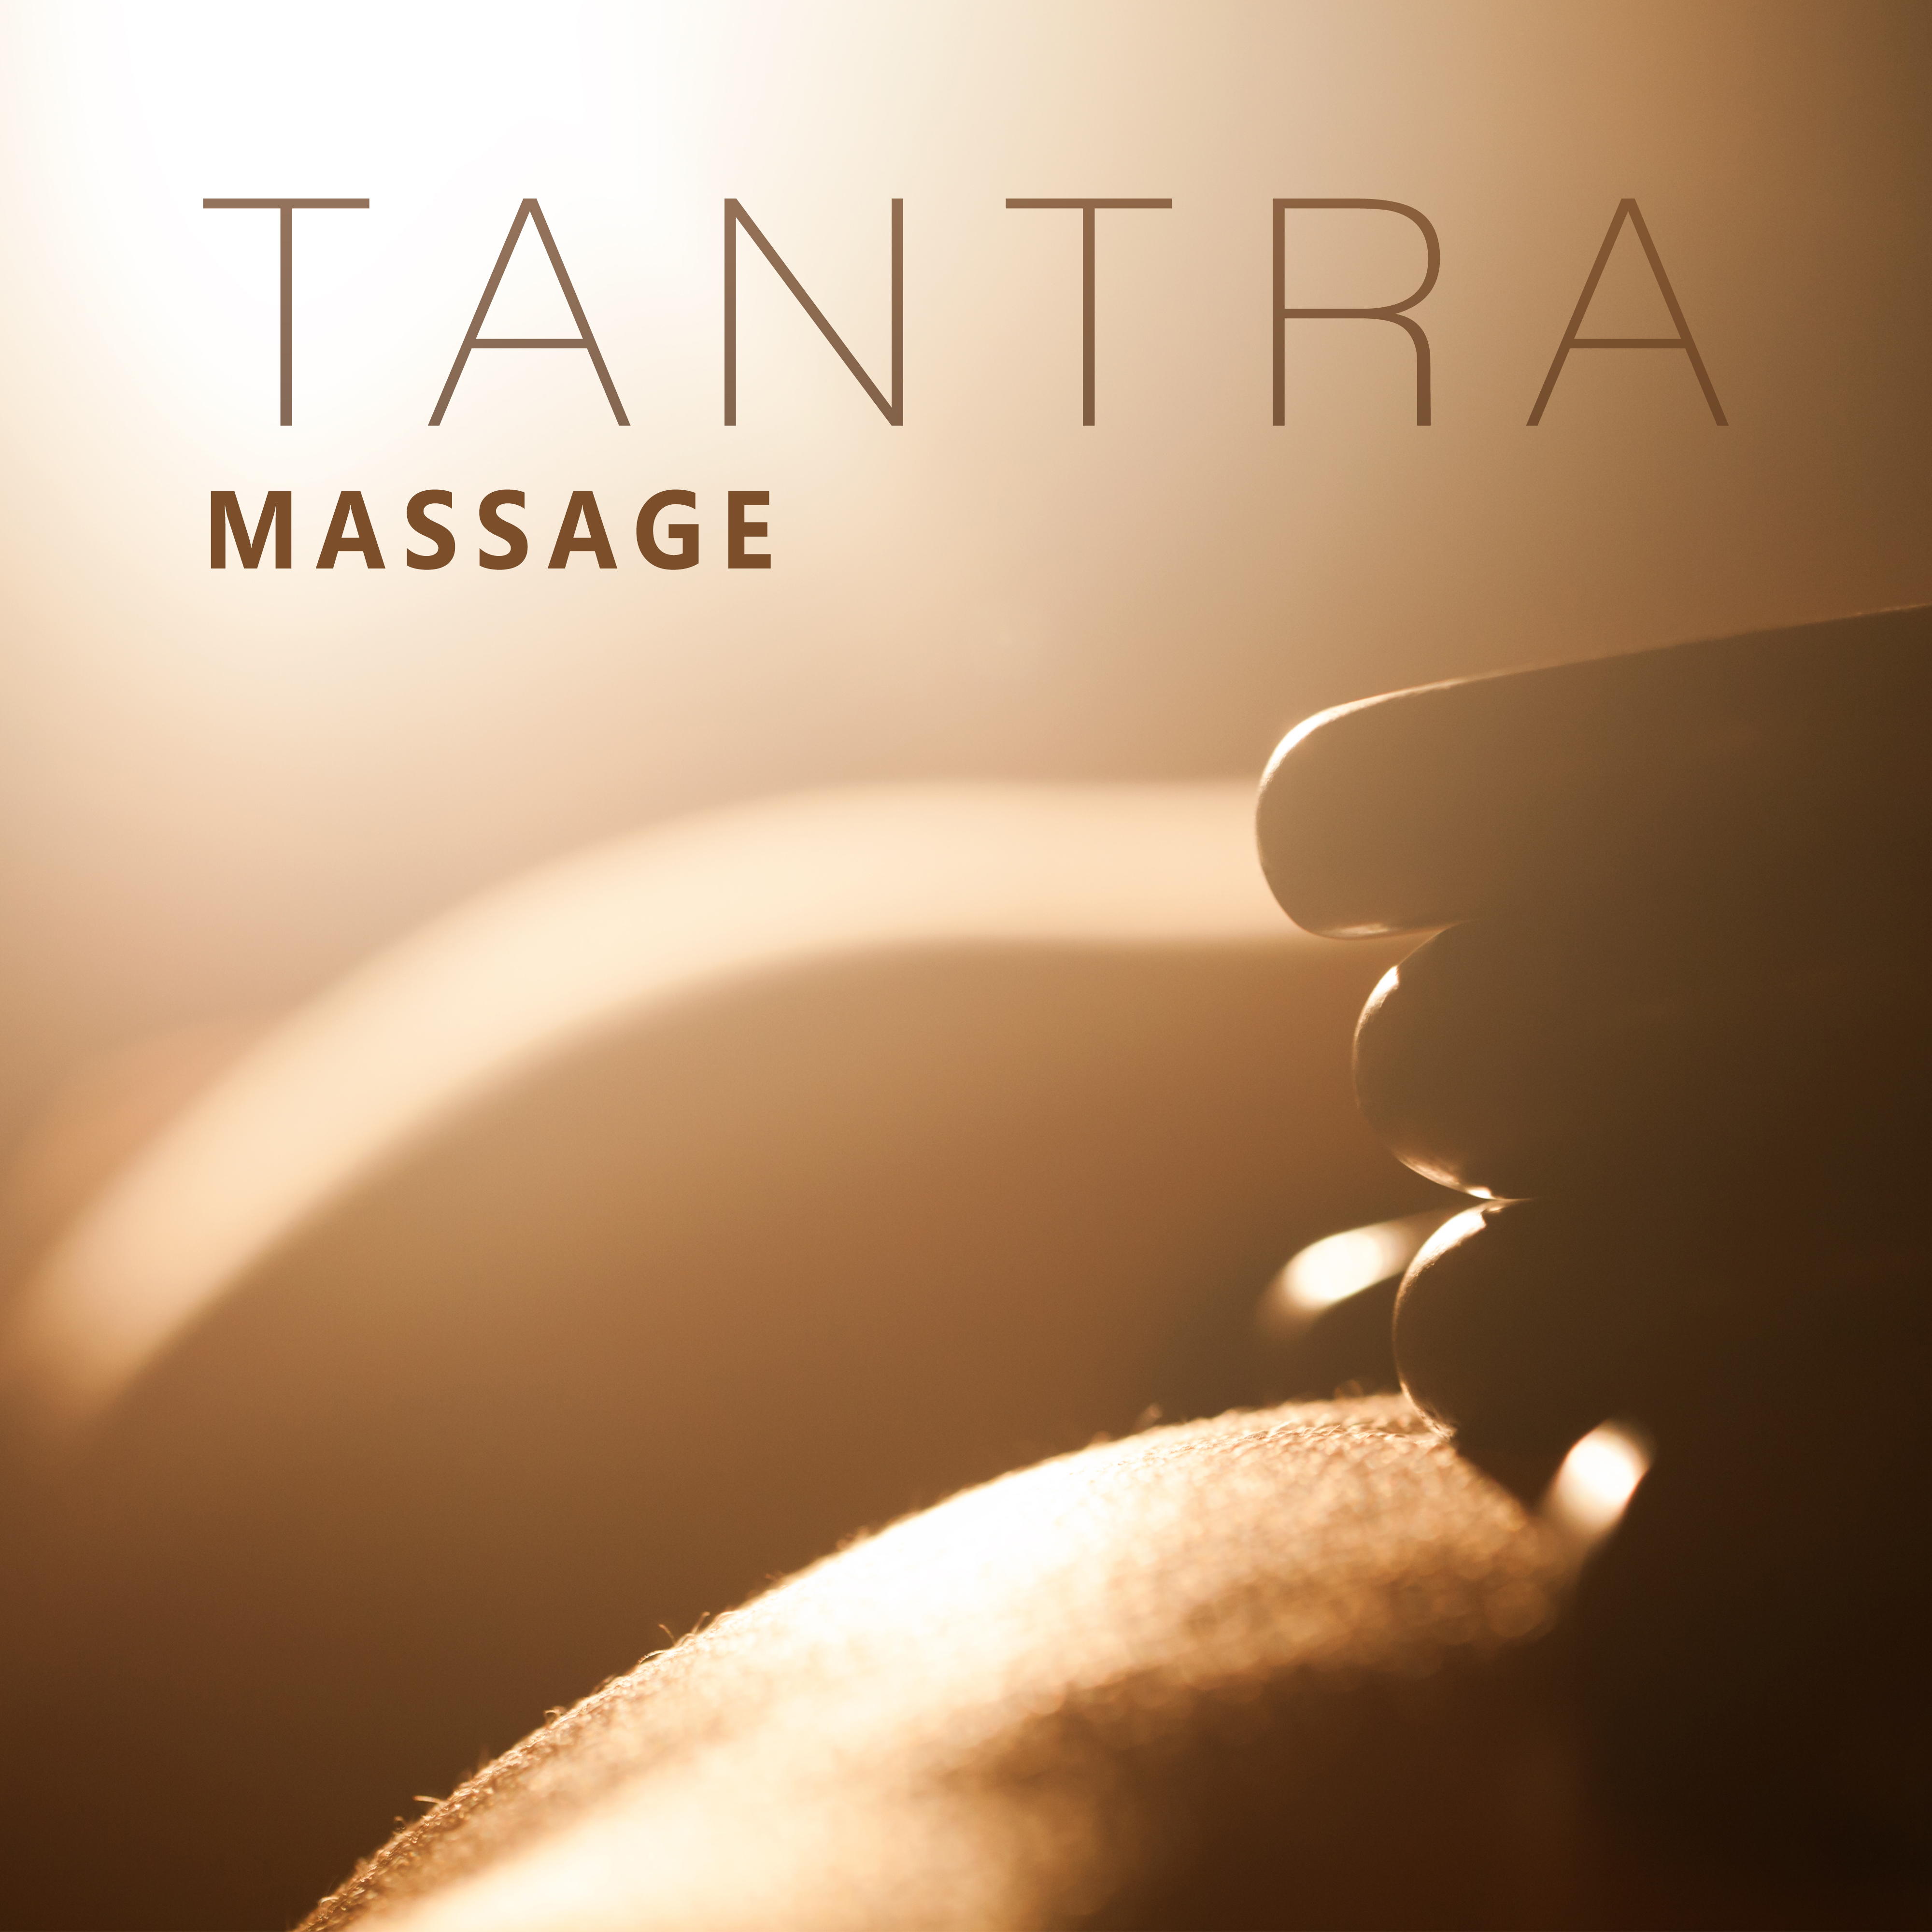 Tantra Massage – Spiritual Sounds of New Age Music for Tantra Massage, Sensual Sounds for Massage, Spa, Wellness